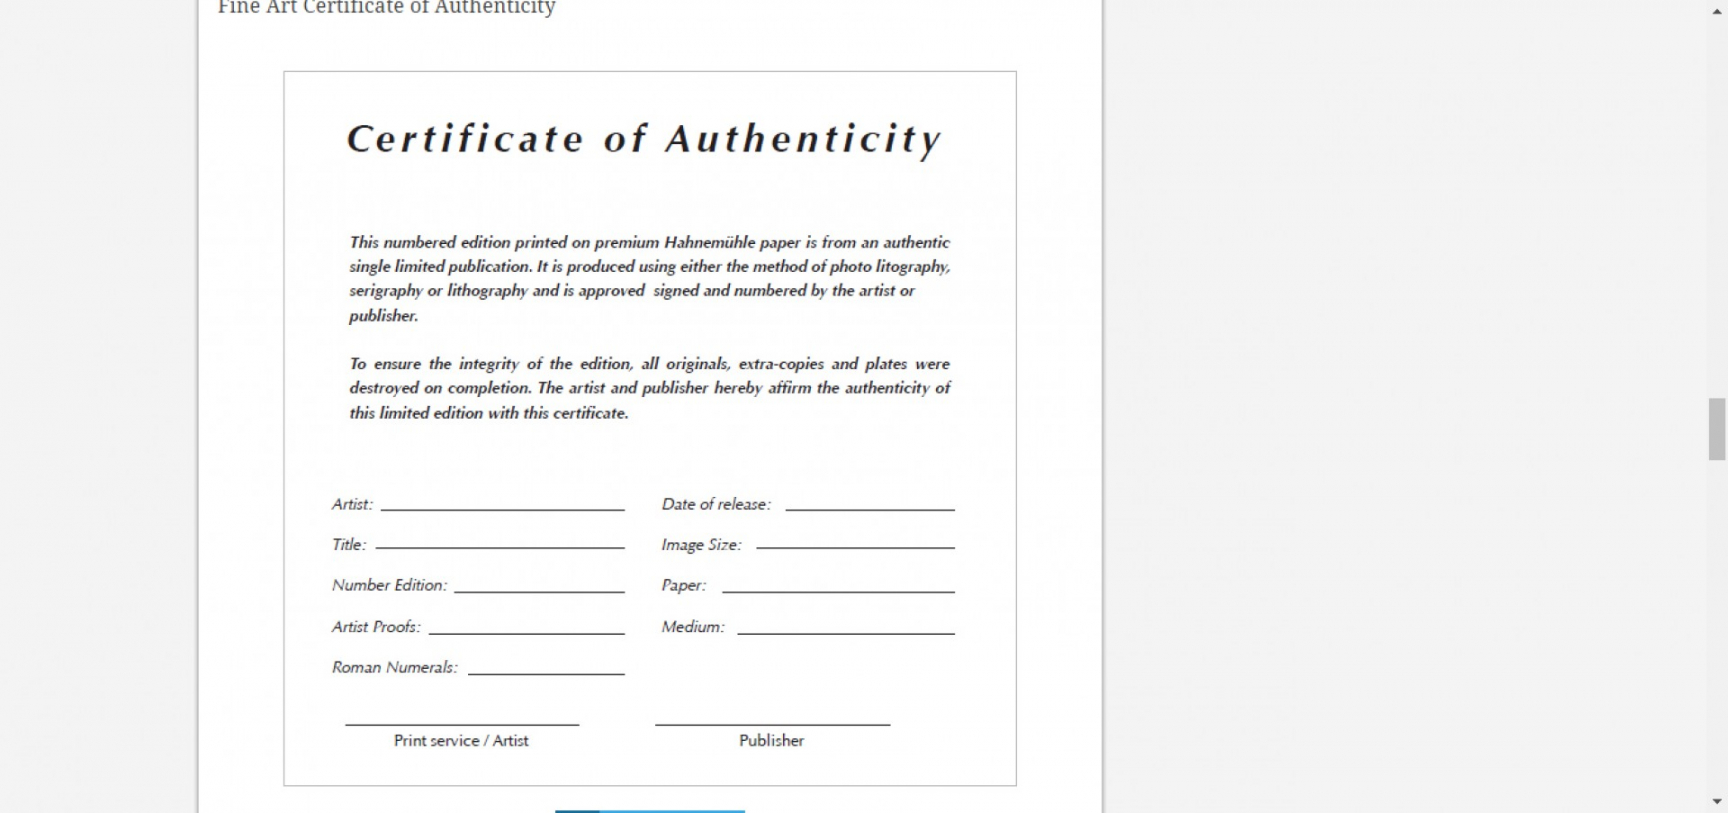 certificate-of-authenticity-artwork-template-emetonlineblog